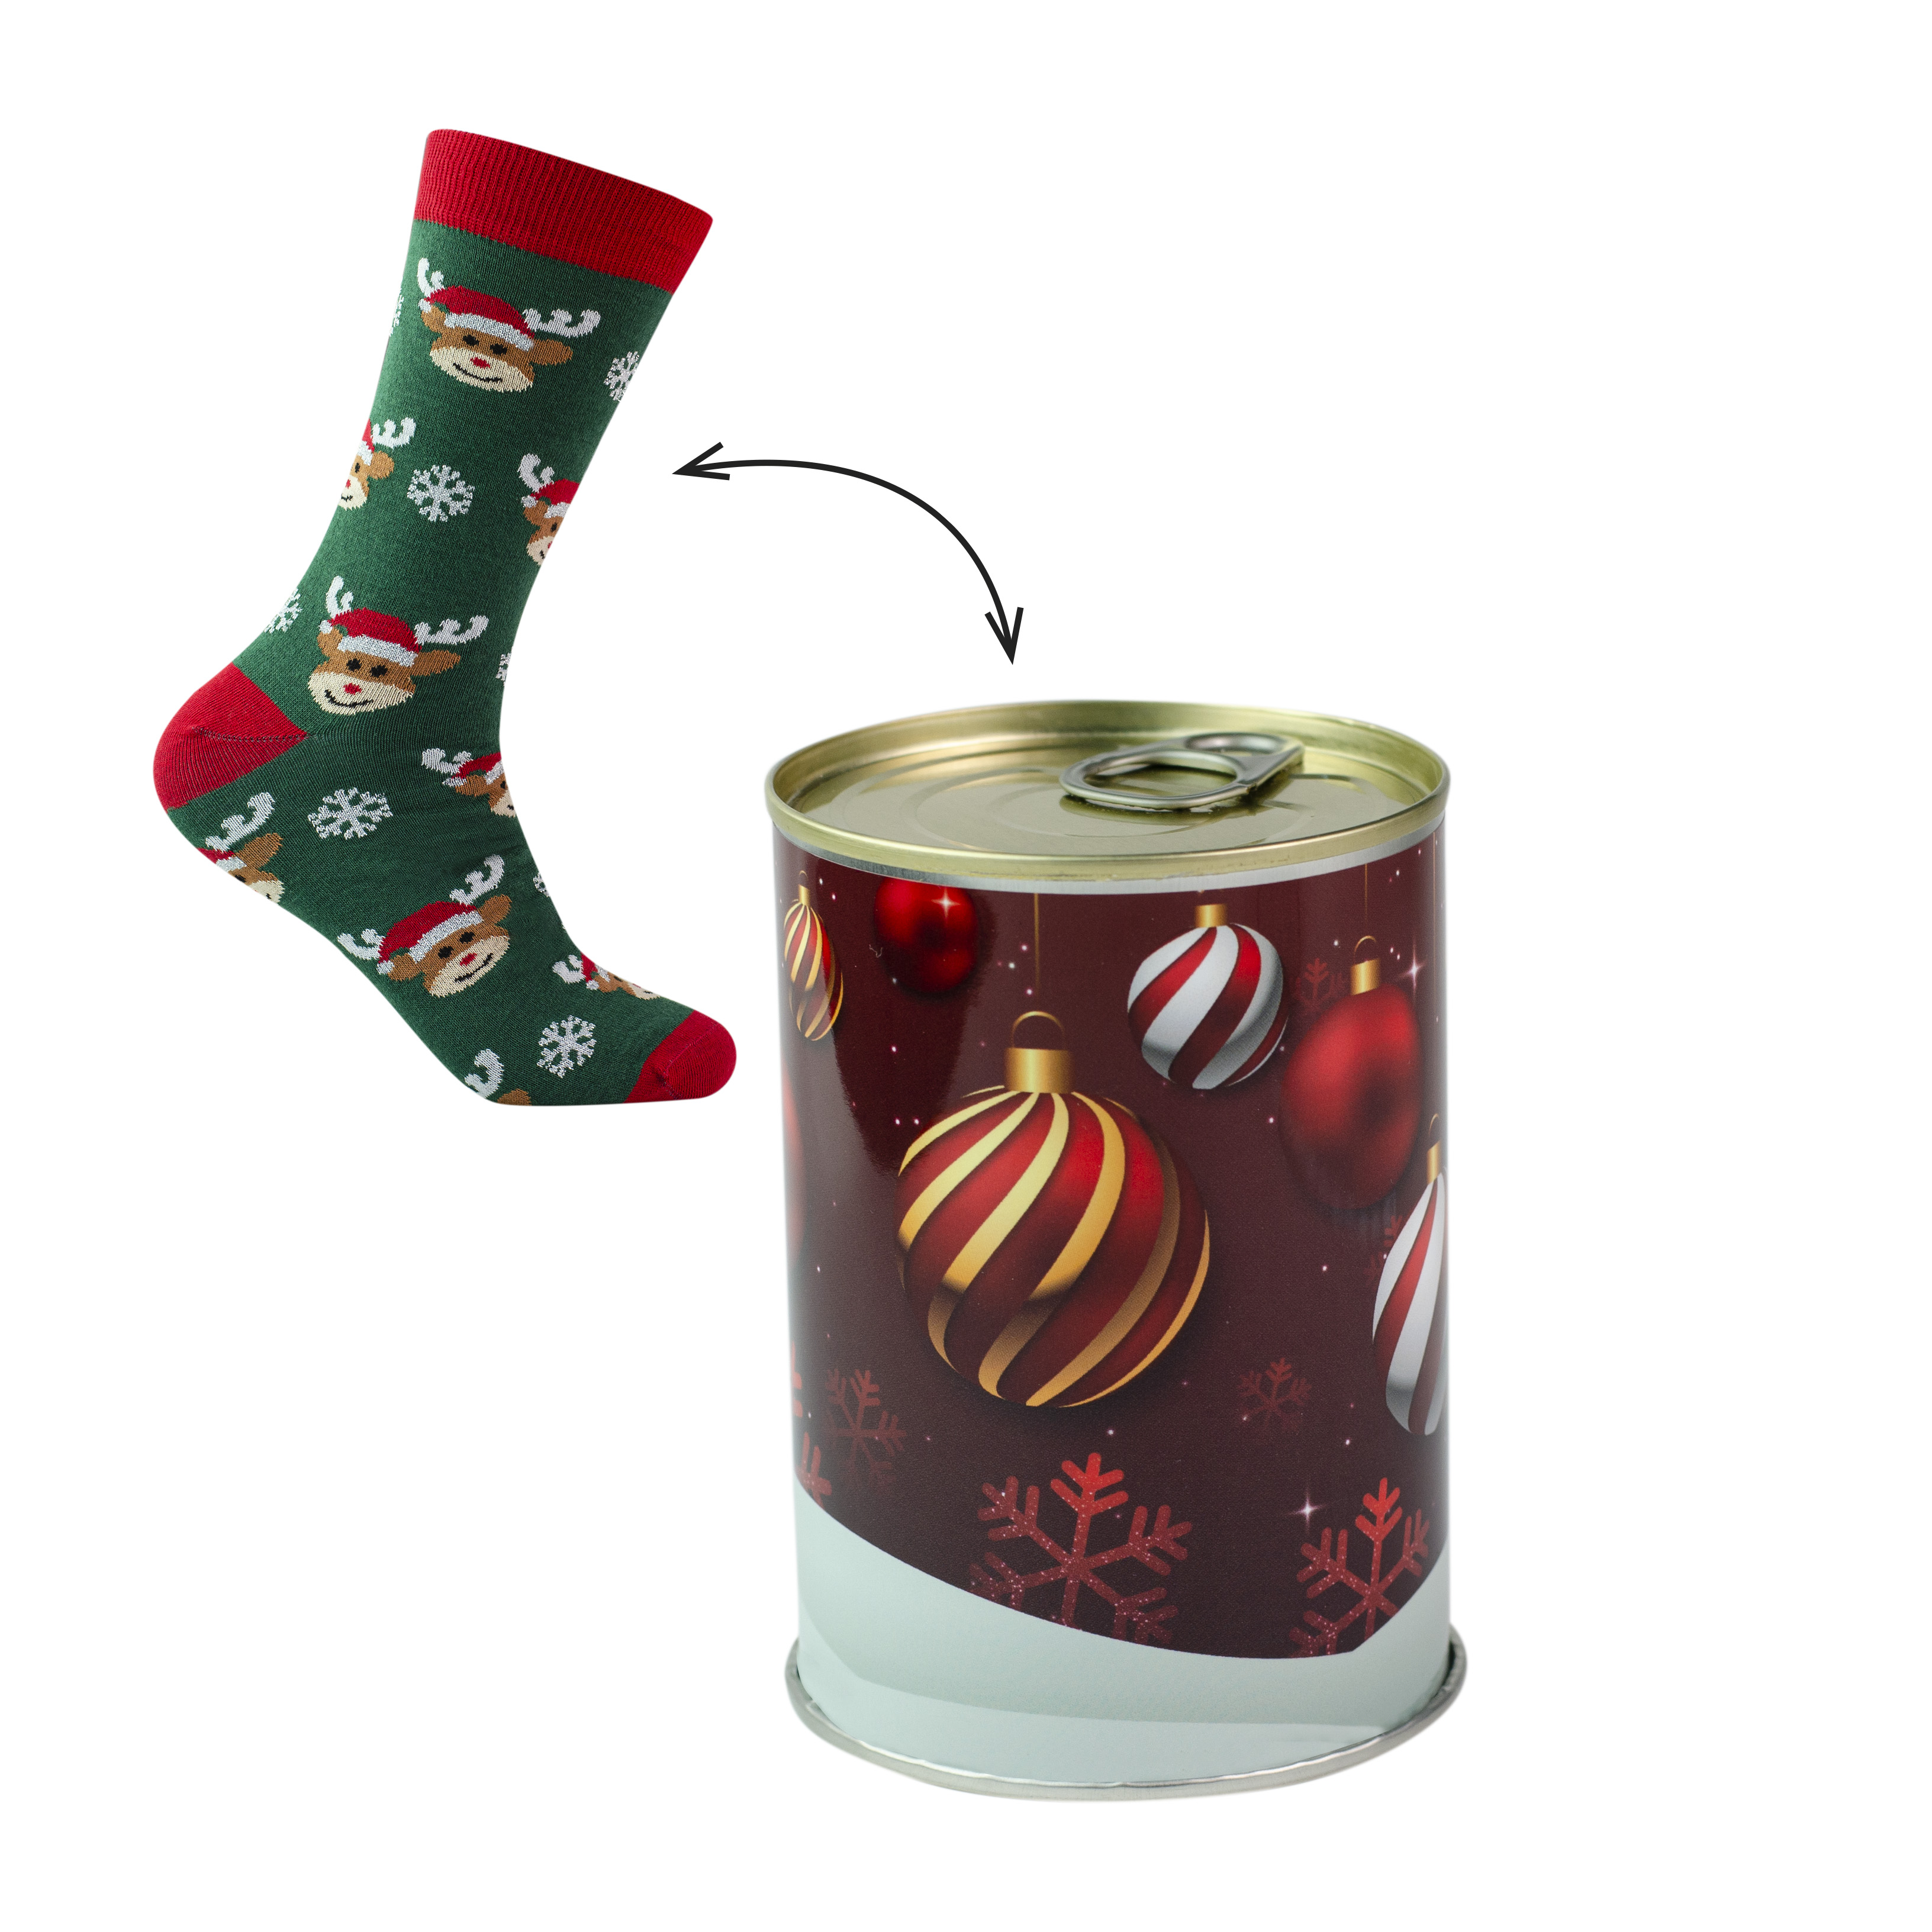 Christmas “Sparkle” Socks